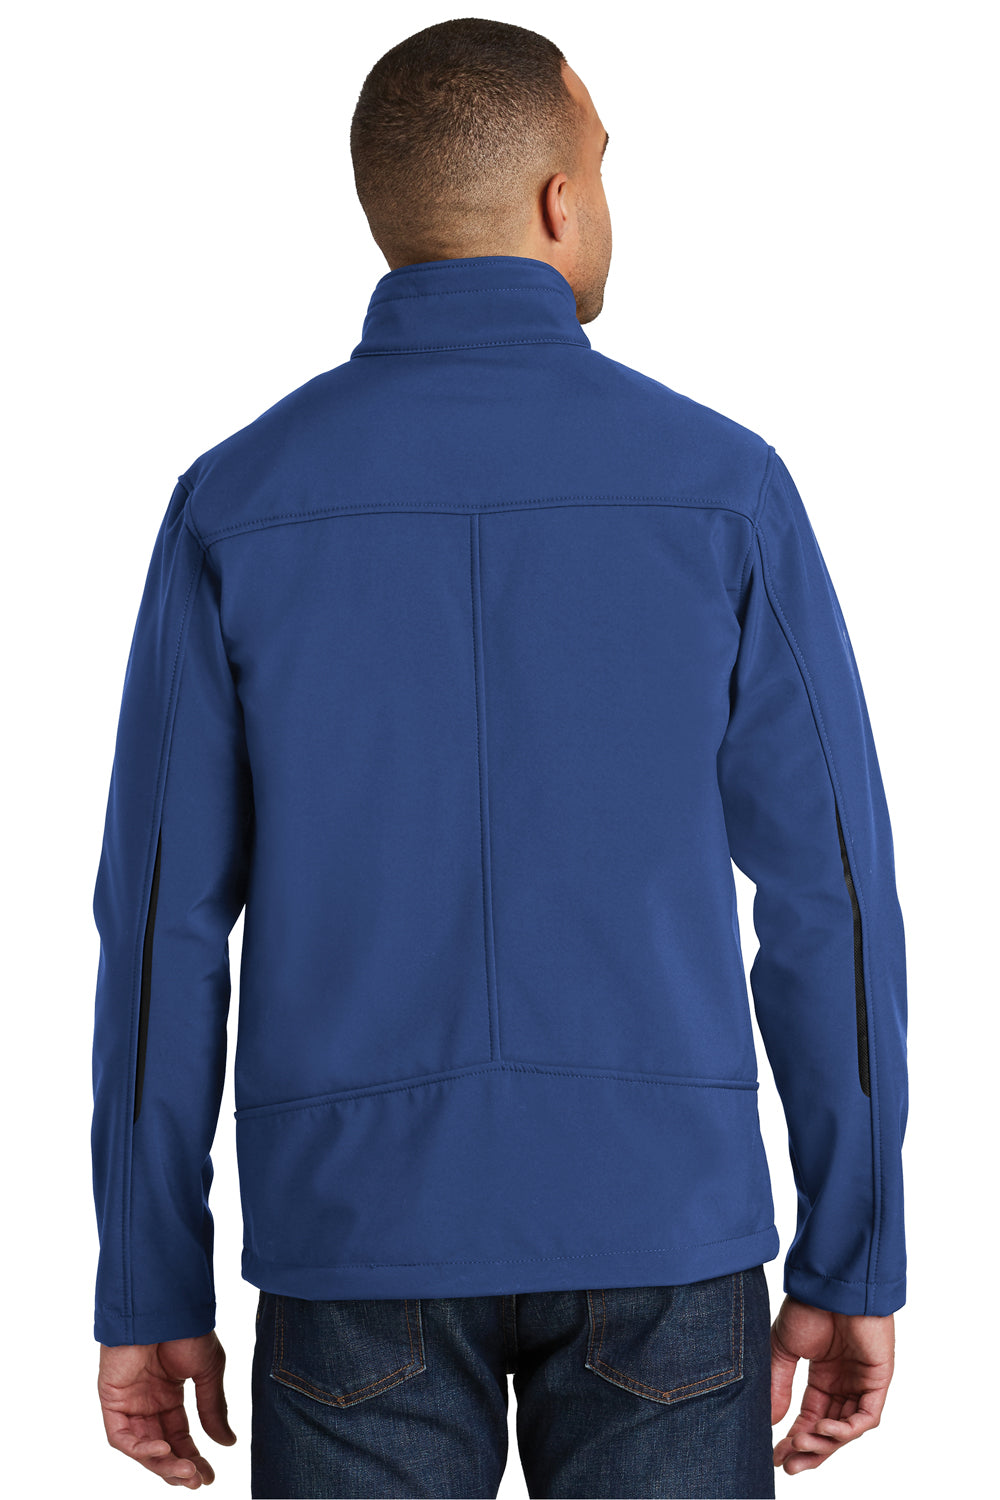 Port Authority J324 Mens Welded Wind & Water Resistant Full Zip Jacket Royal Blue Back